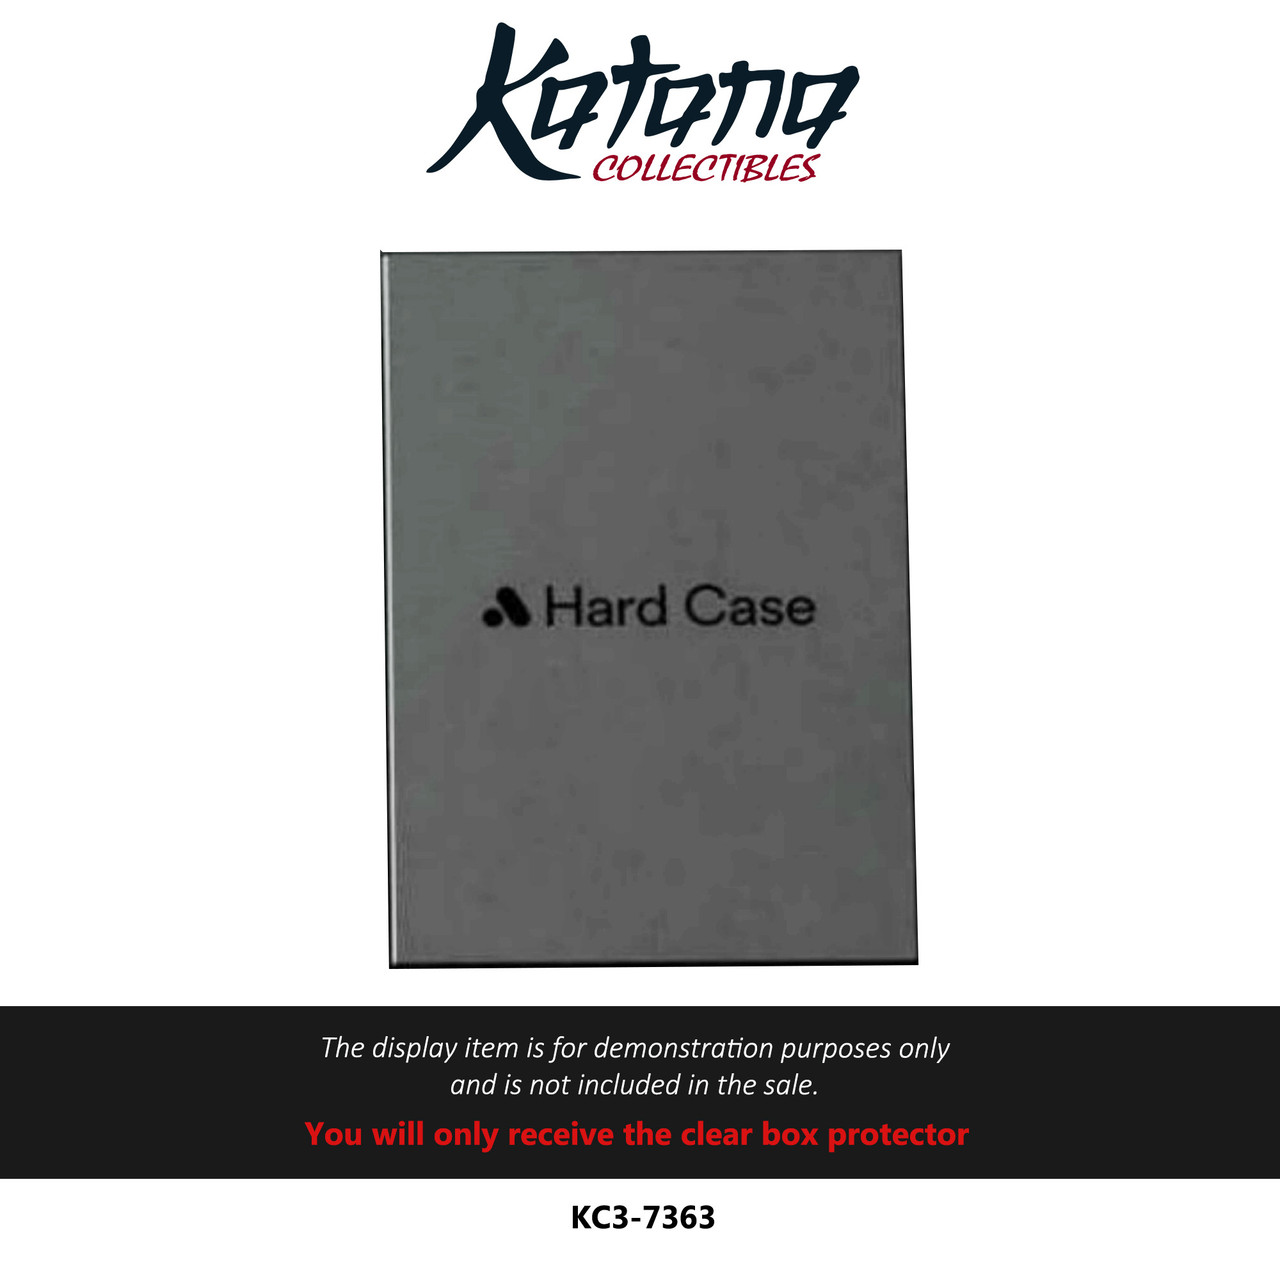 Katana Collectibles Protector For Analogue Pocket Hard Case Package